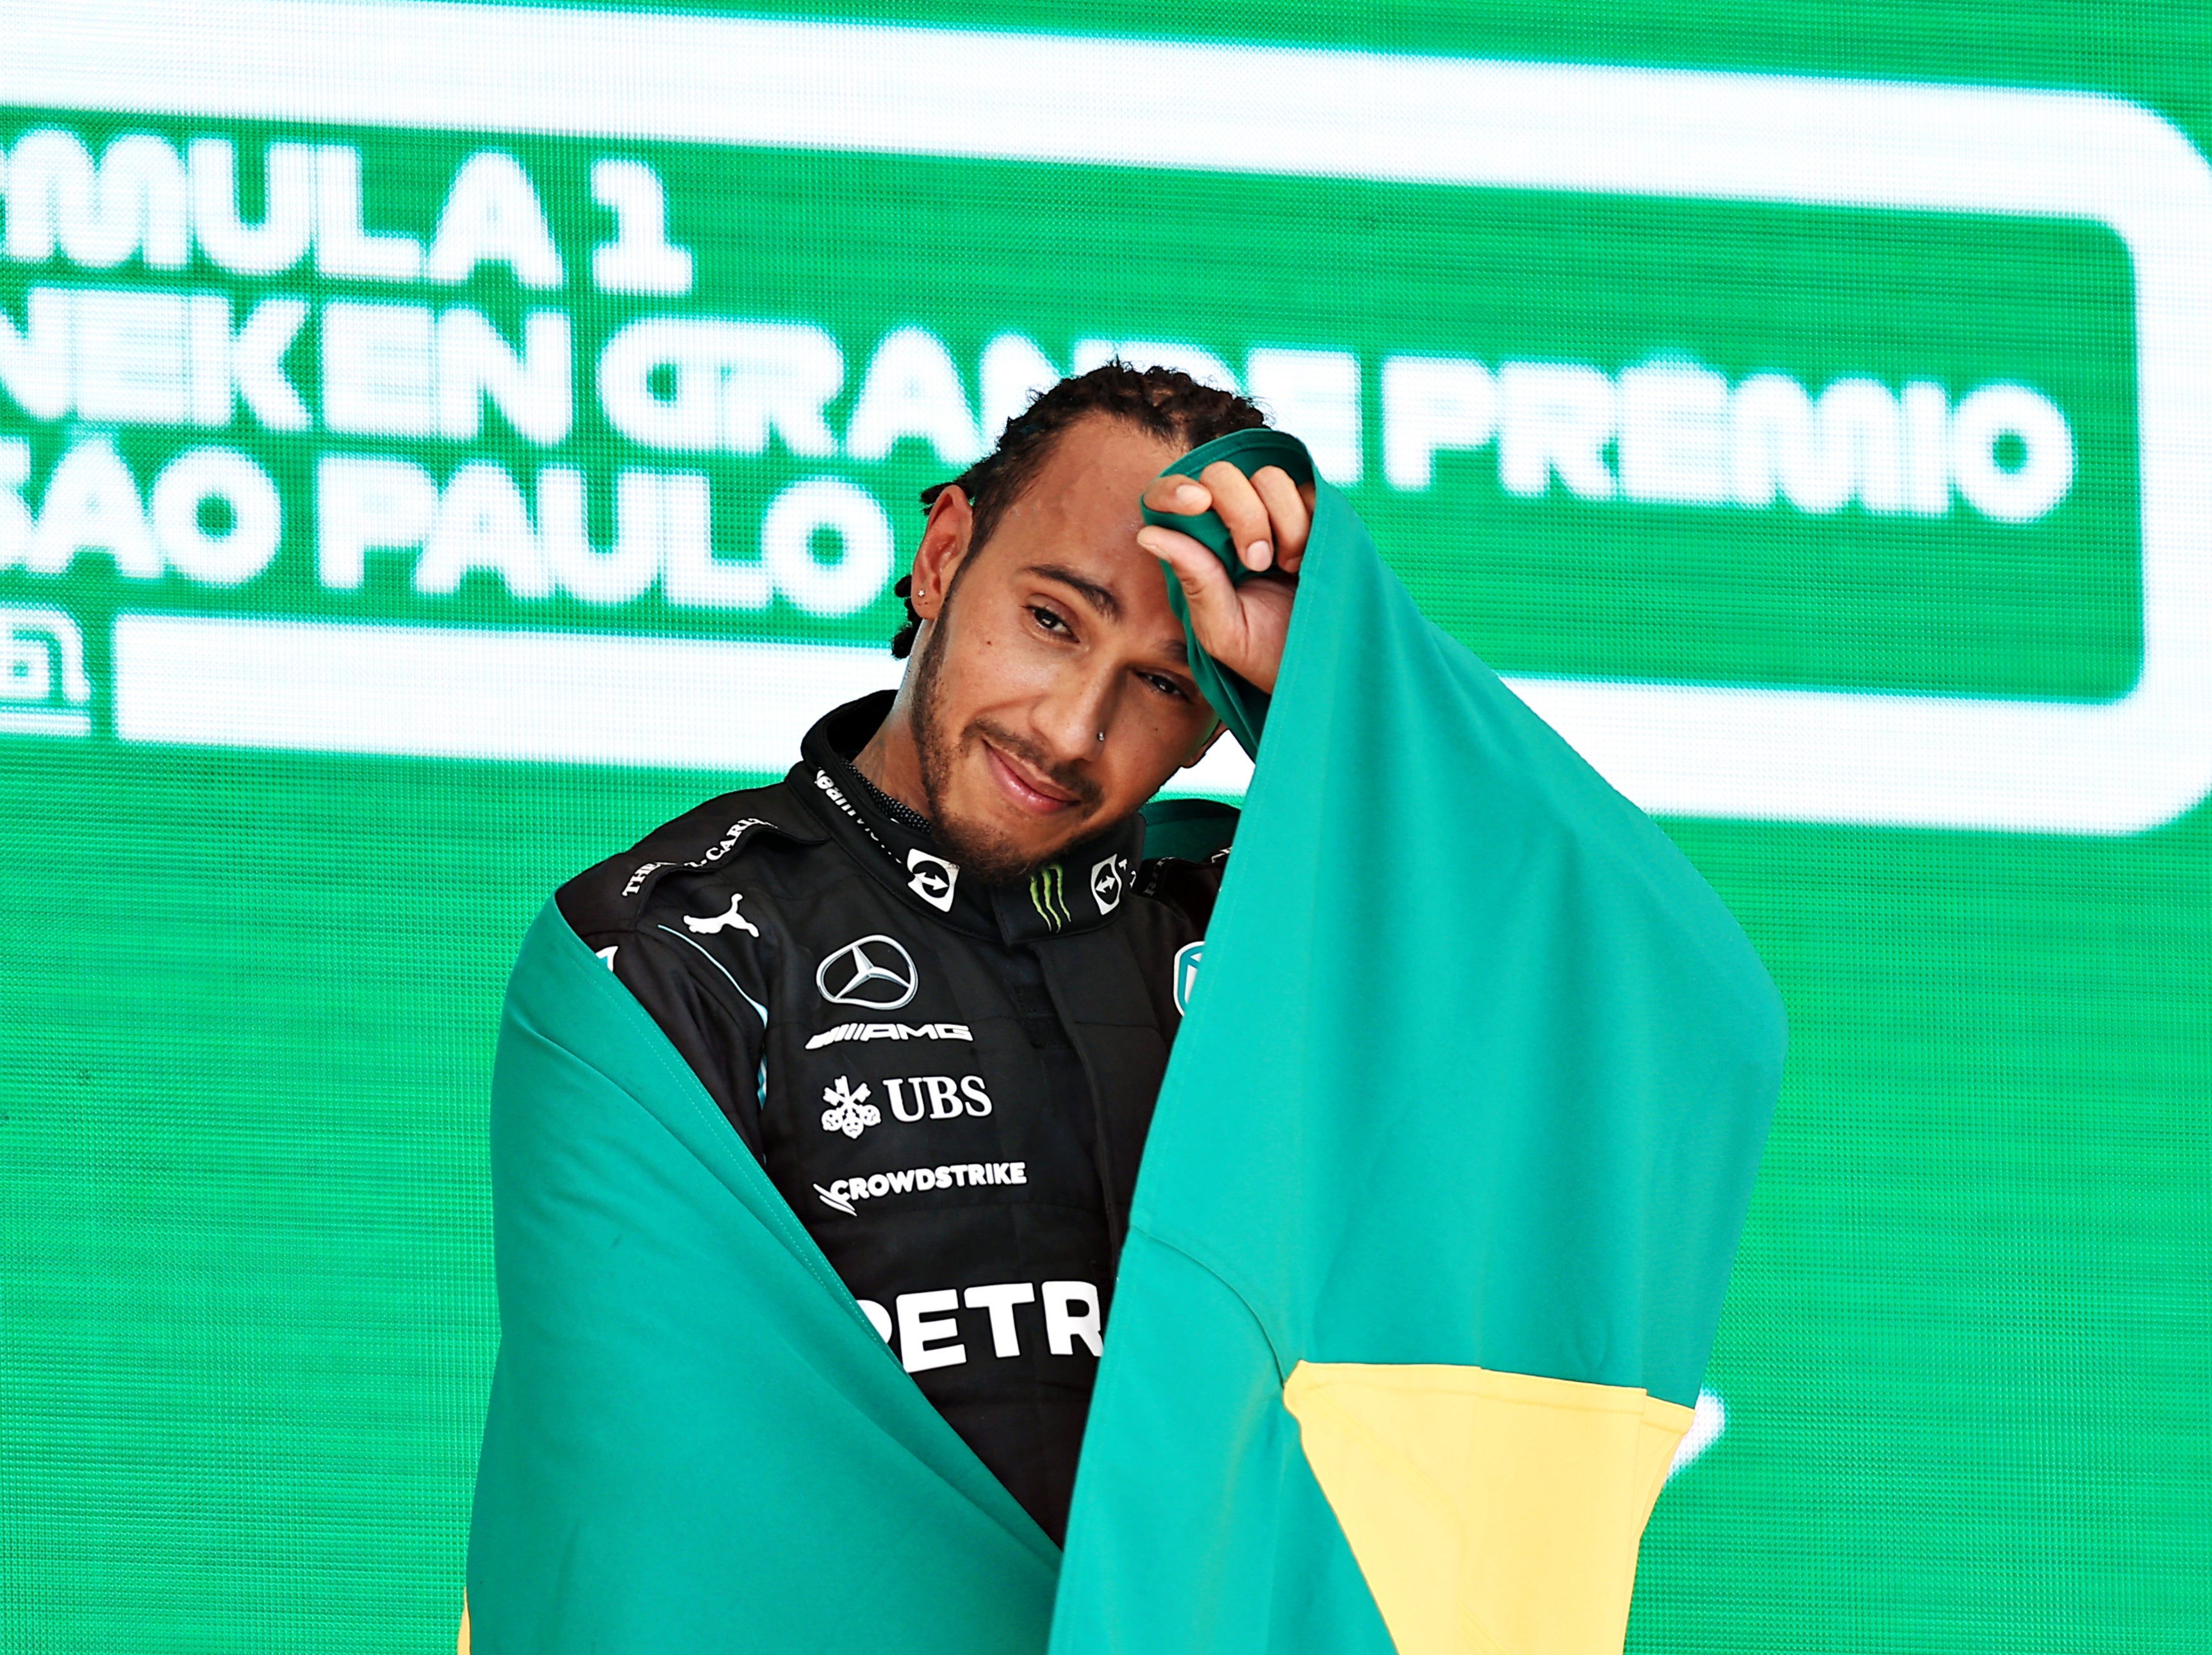 Brazilian Grand Prix winner Lewis Hamilton